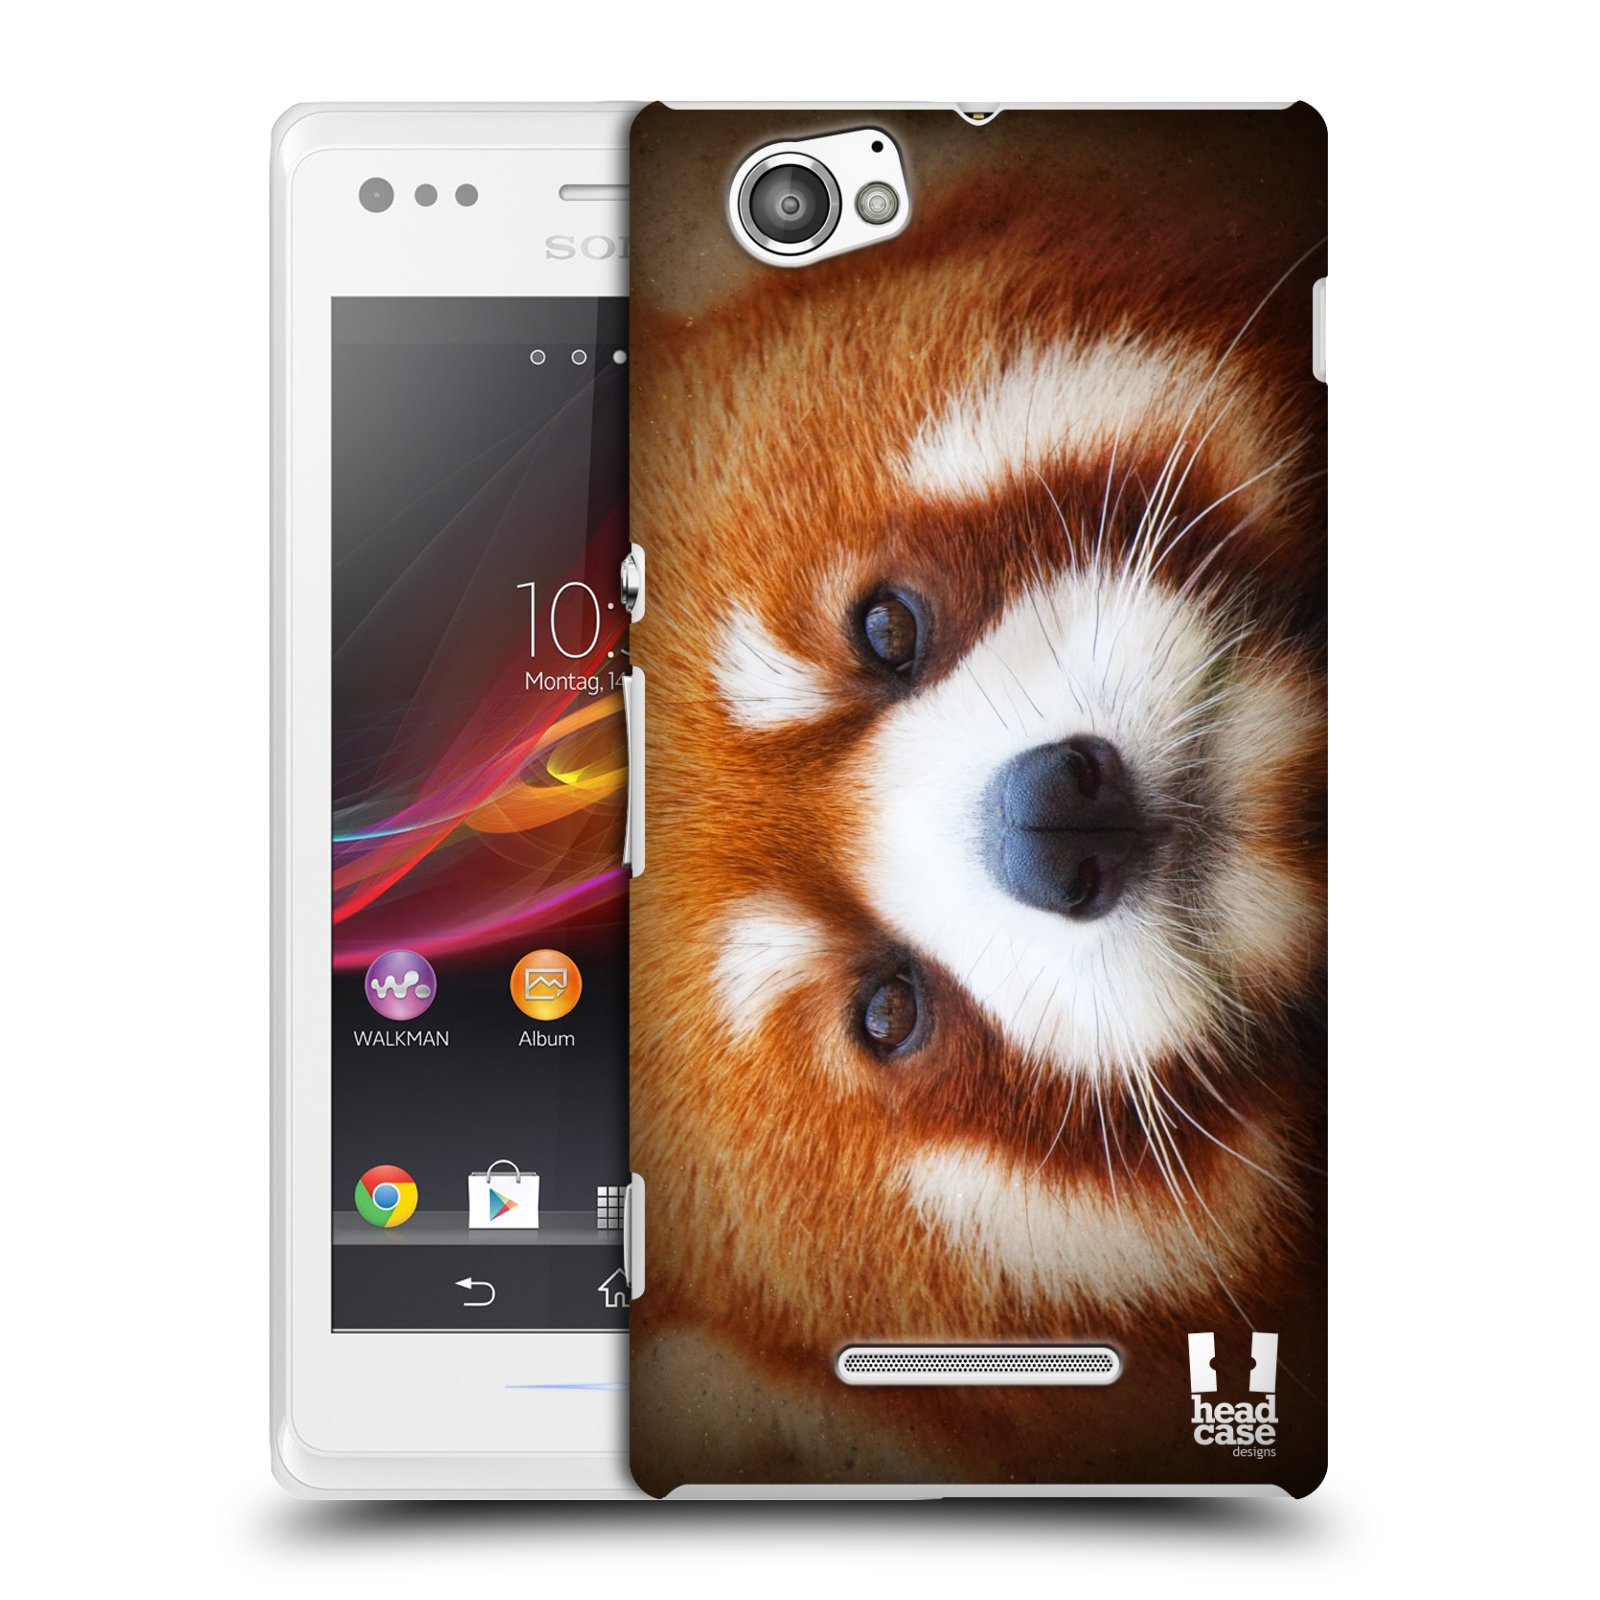 HEAD CASE plastový obal na mobil Sony Xperia M vzor Zvířecí tváře 2 medvěd panda rudá